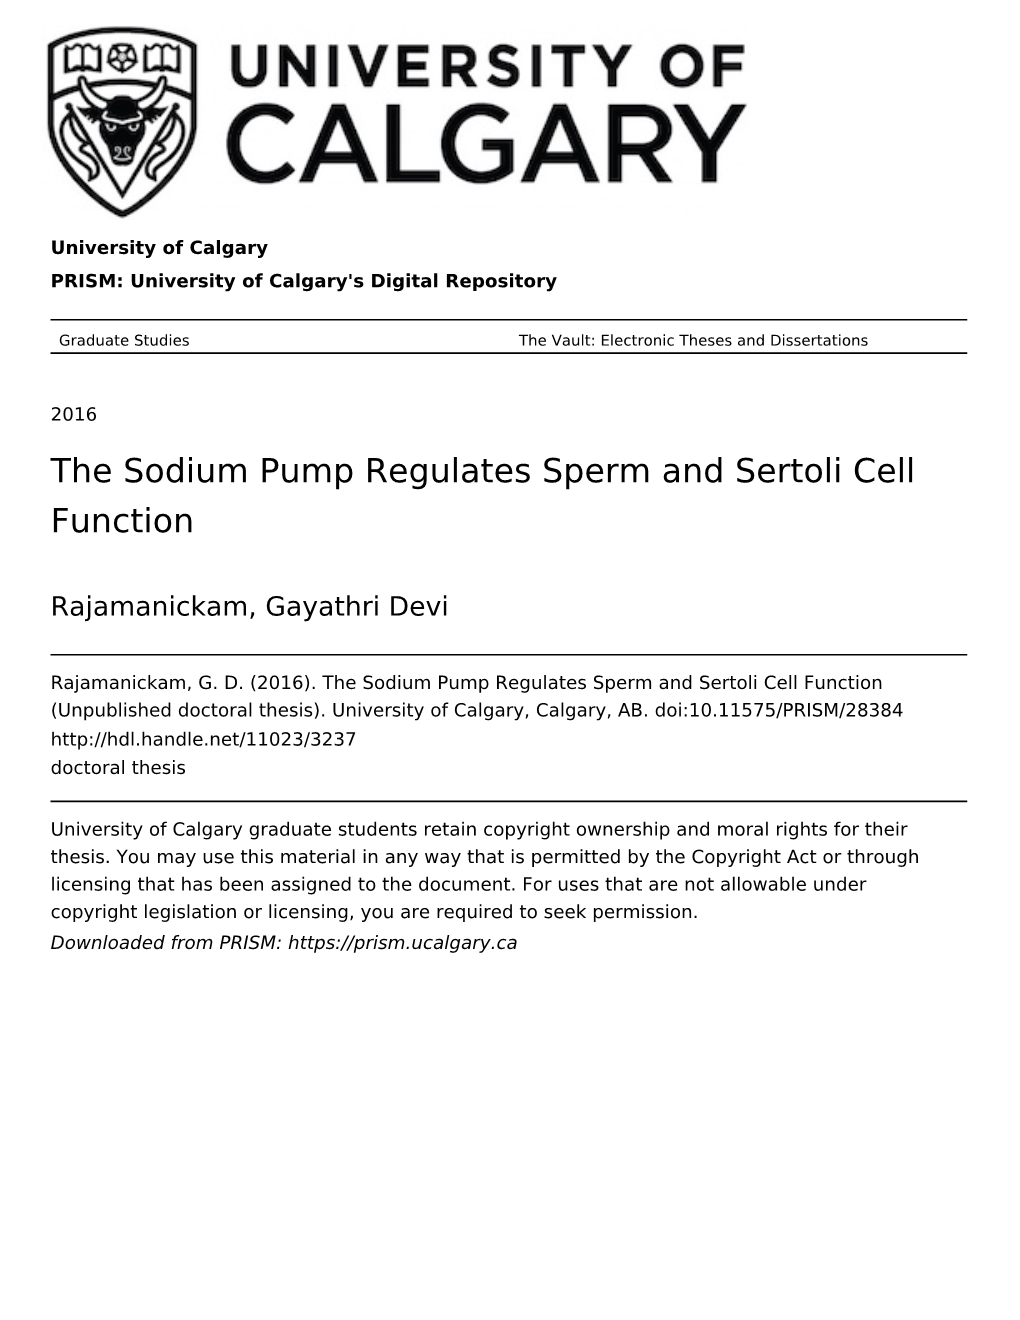 The Sodium Pump Regulates Sperm and Sertoli Cell Function